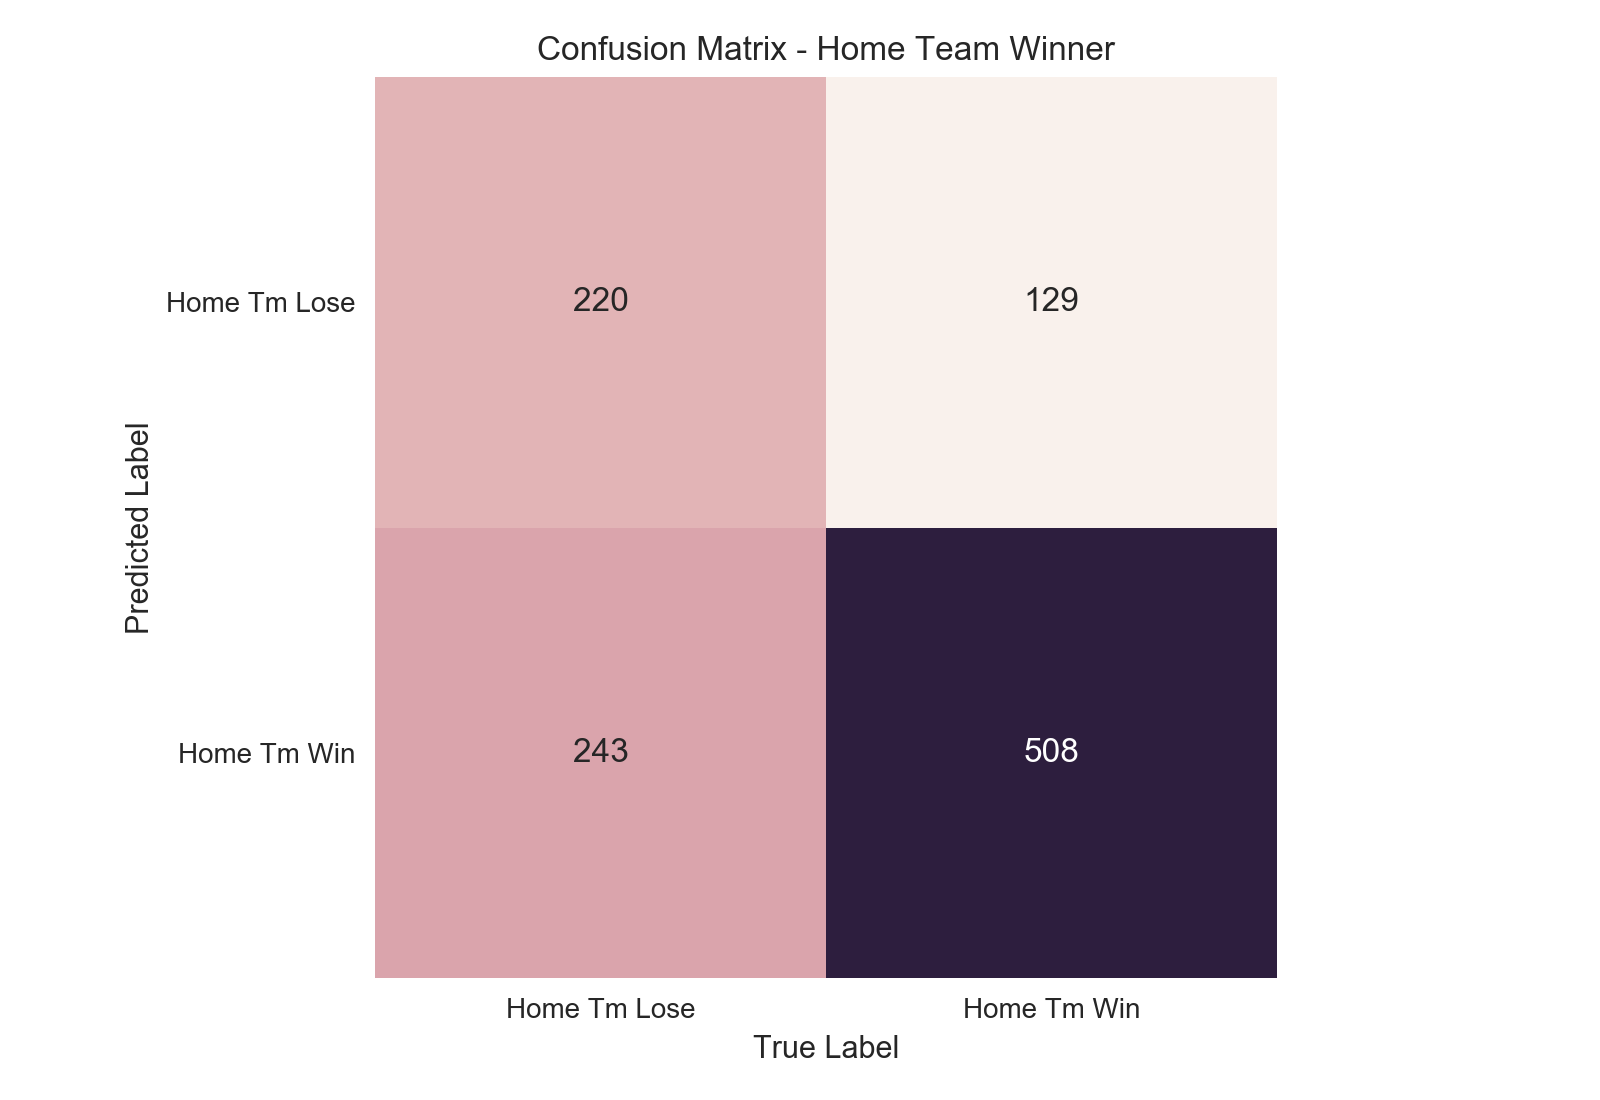 Confusion Matrix for Home Winner